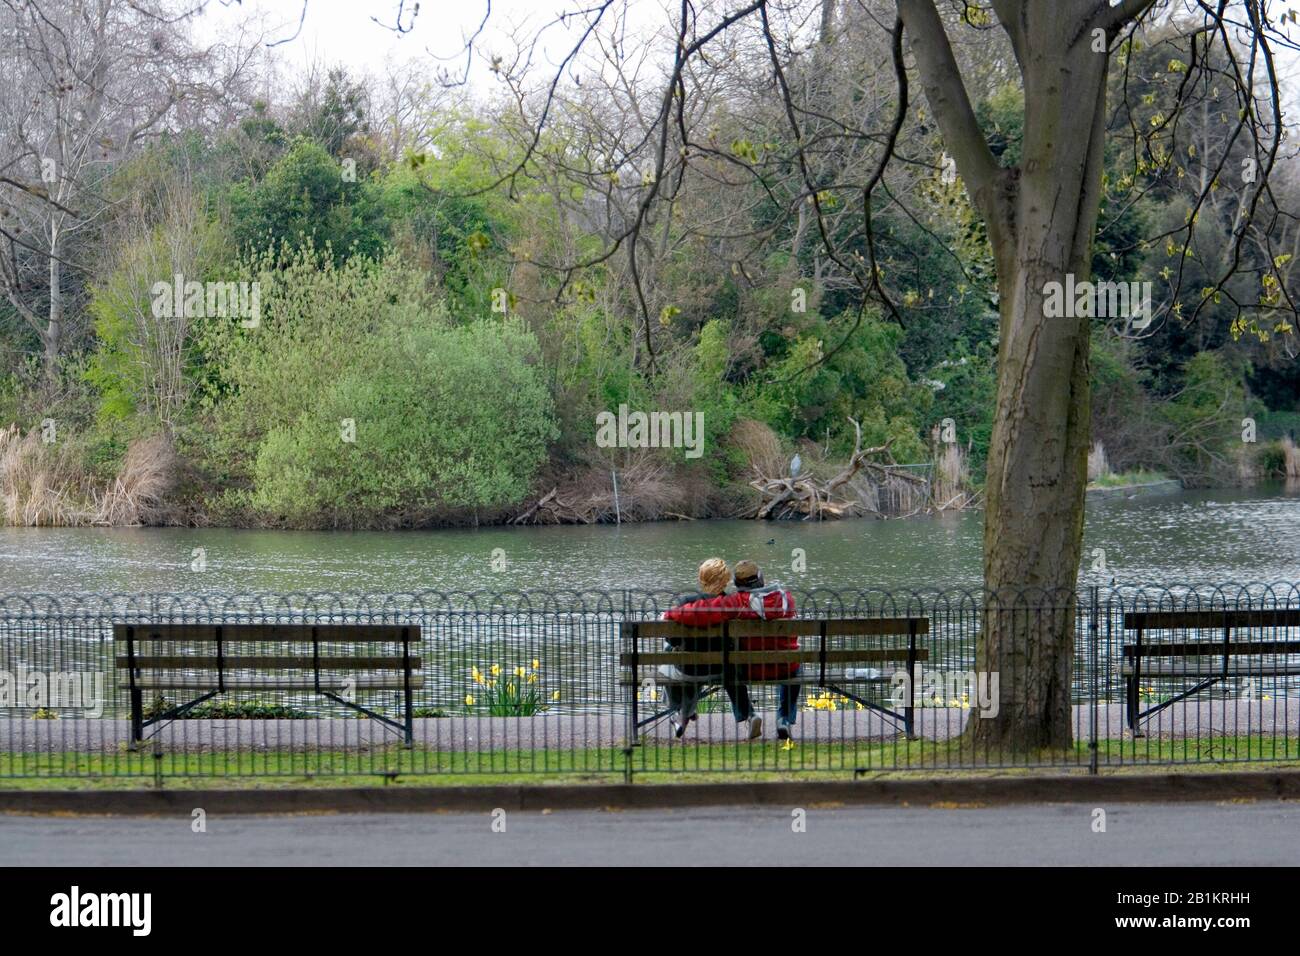 HRH Princess Diana and boyfriend Hasnat Khan had secret trysts in Battersea Park, London, England. Stock Photo